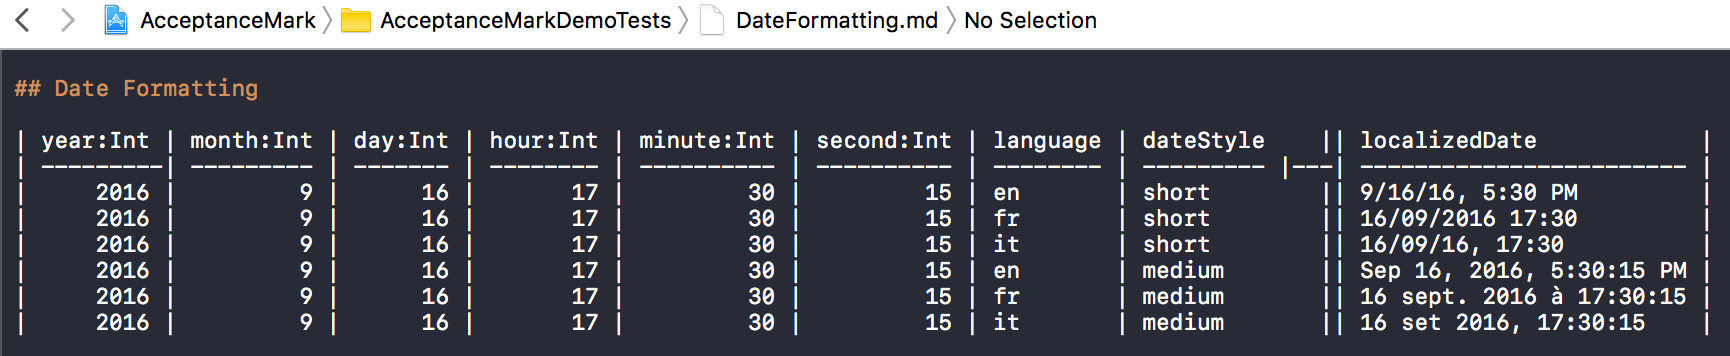 Date formatting markdown file